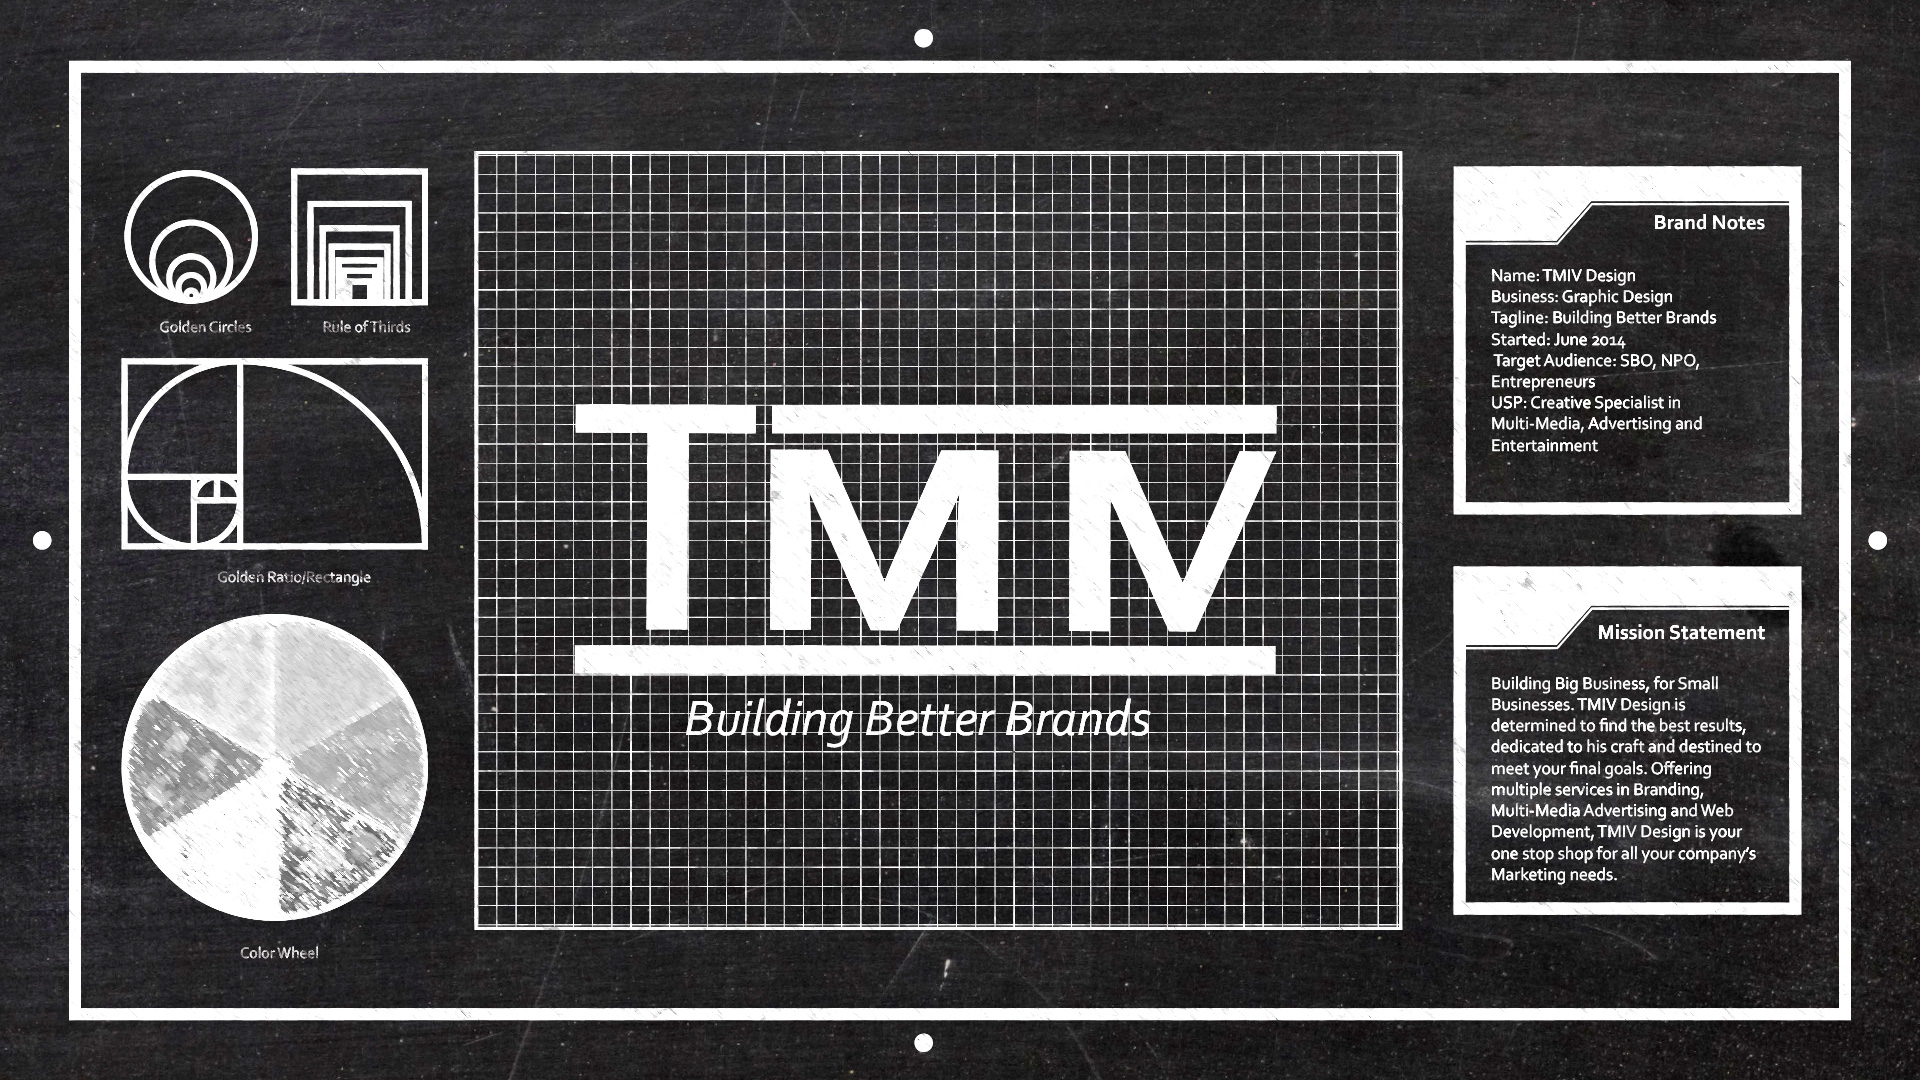 TMIV Design Branding Chalkboard